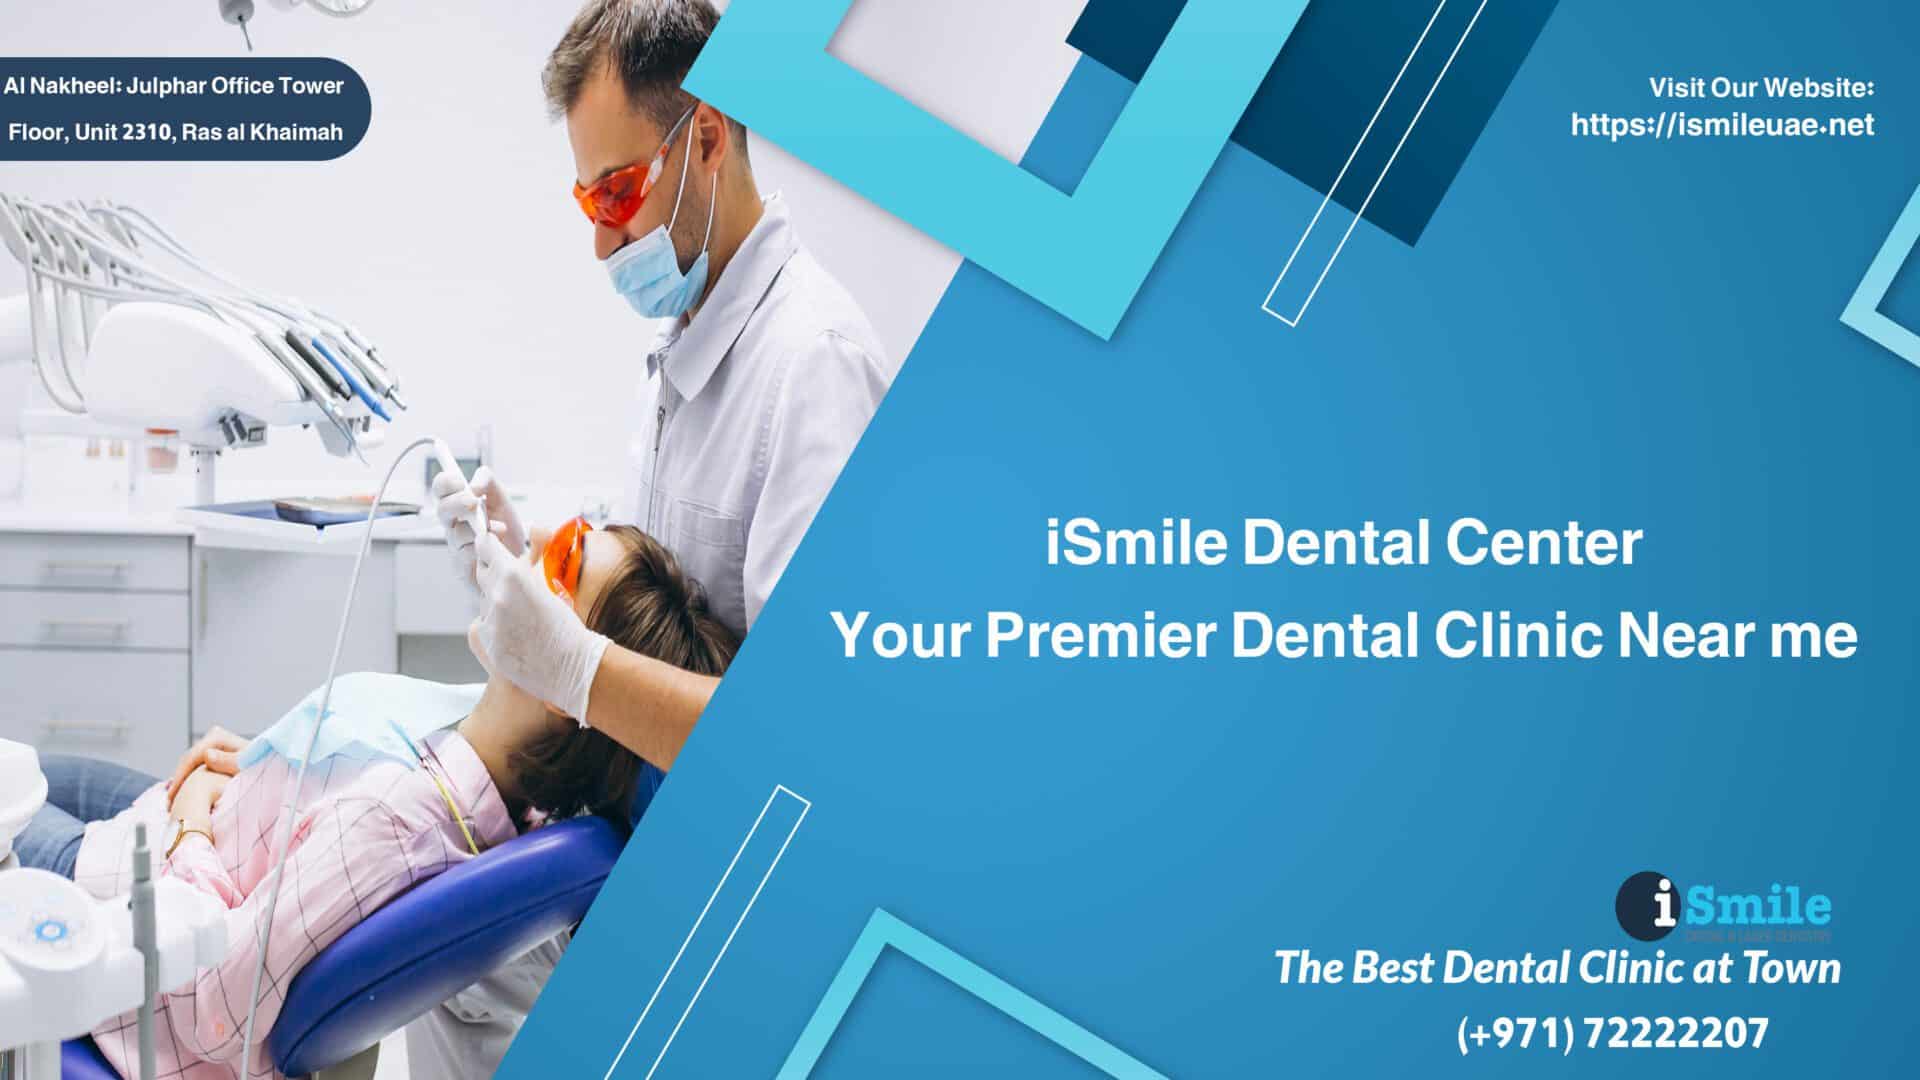 iSmile Dental Center: Your Premier Dental Clinic Near you